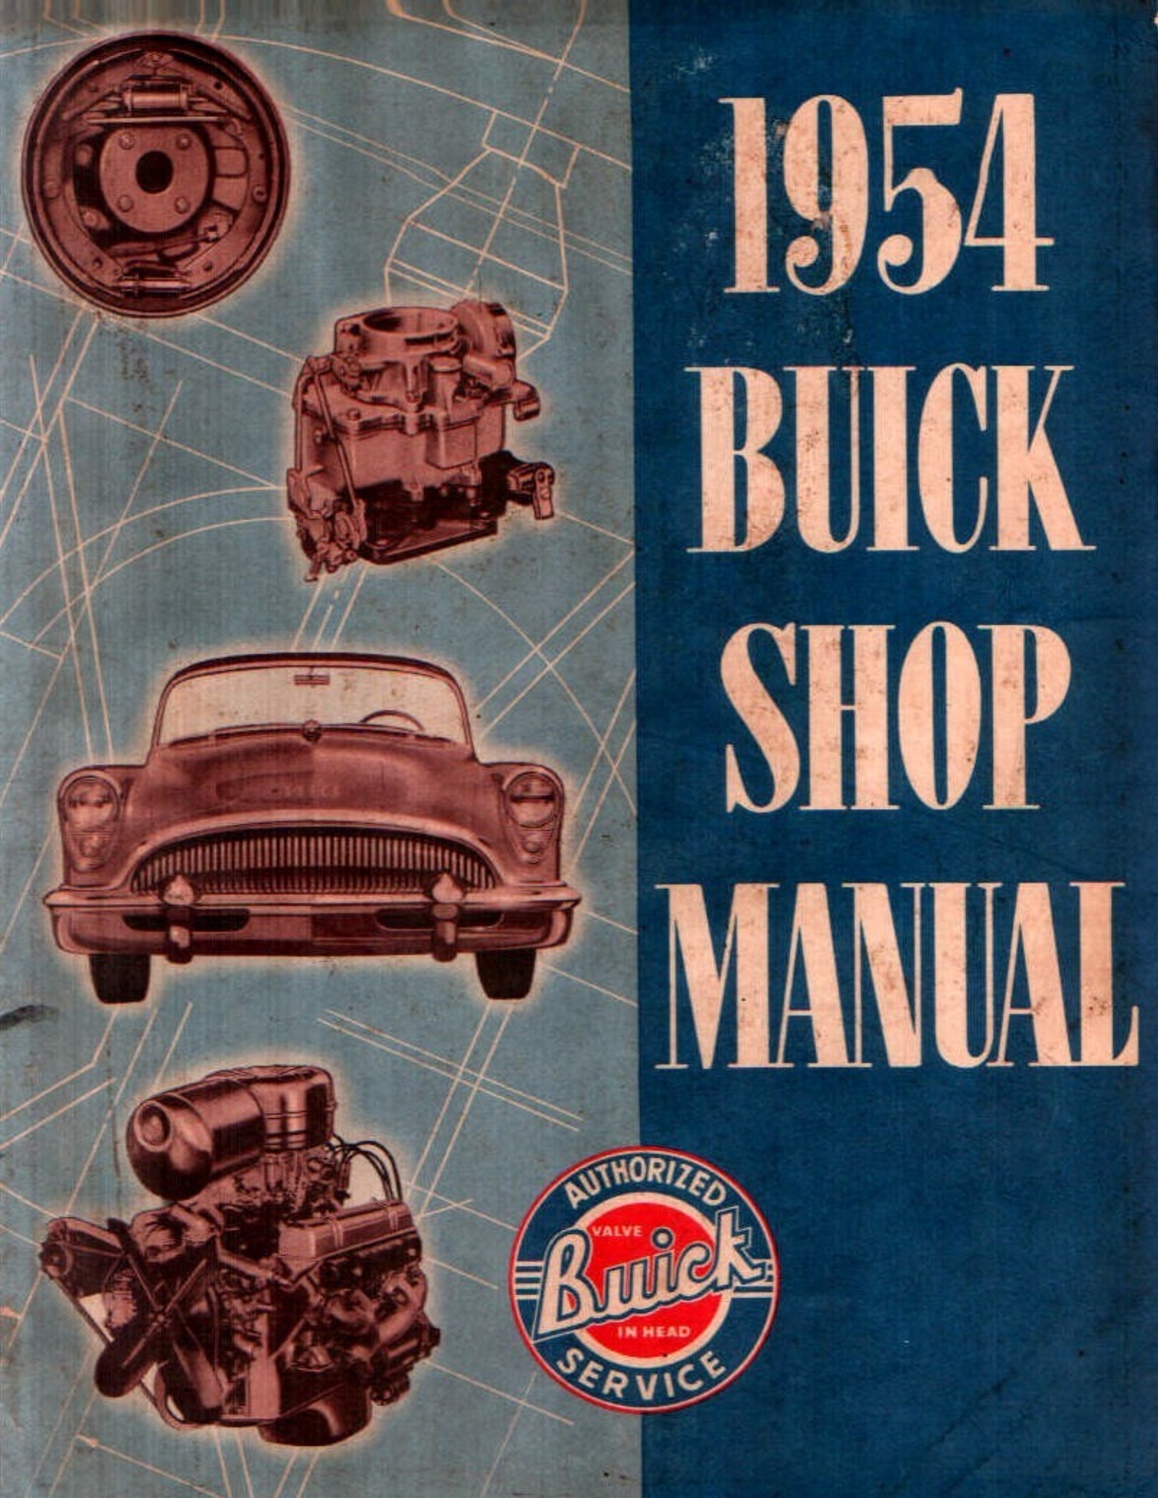 n_01 1954 Buick Shop Manual - Gen Information-001-001.jpg